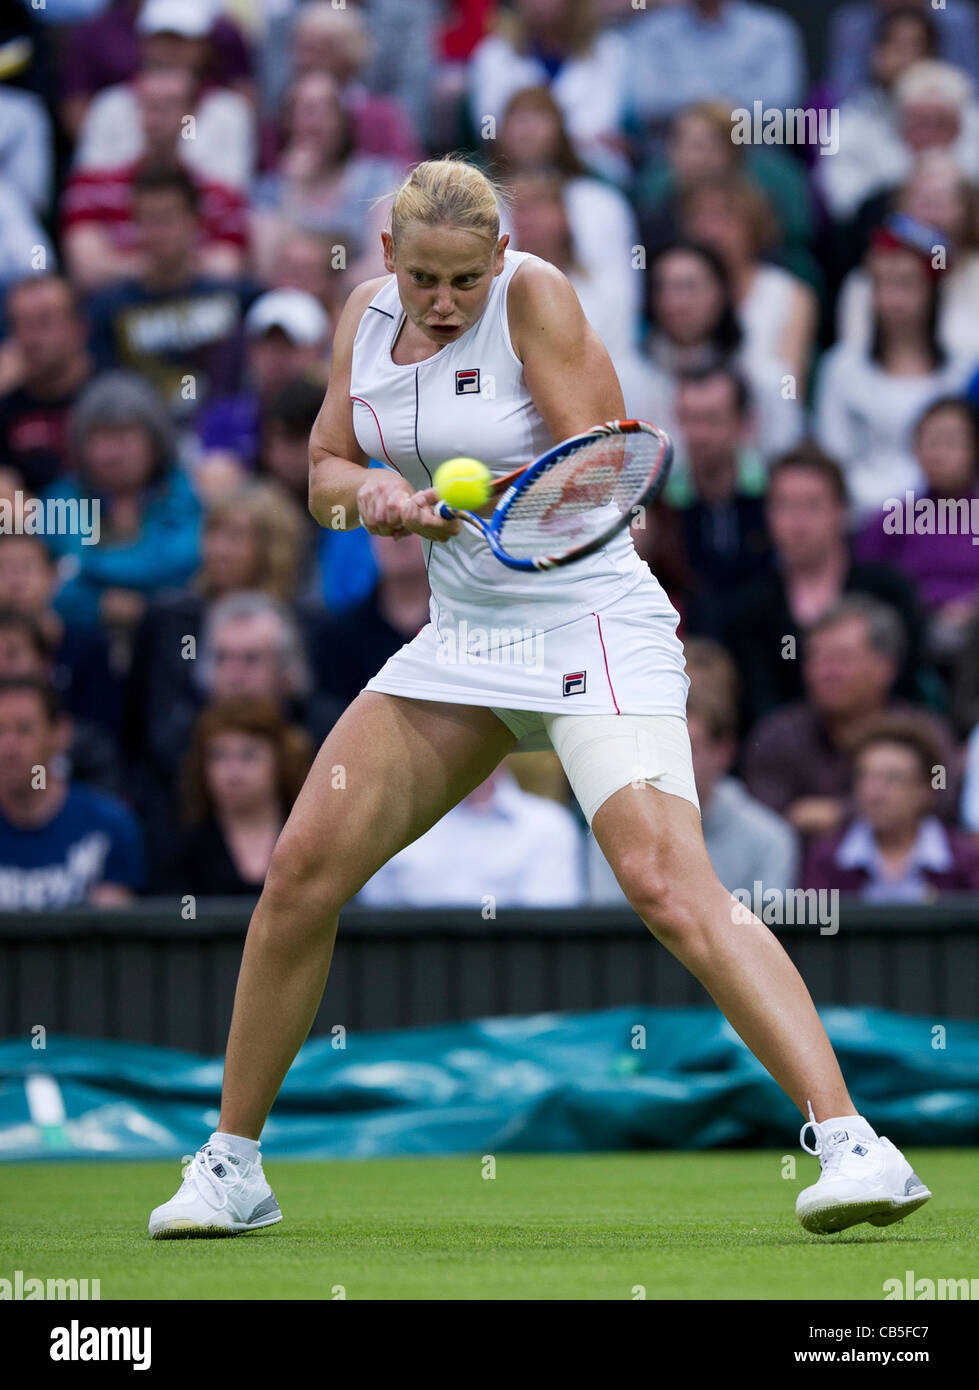 20.06.2011. Francesca Schiavone v Jelena Dokic. Jelena in action. The Wimbledon Tennis Championships. Stock Photo